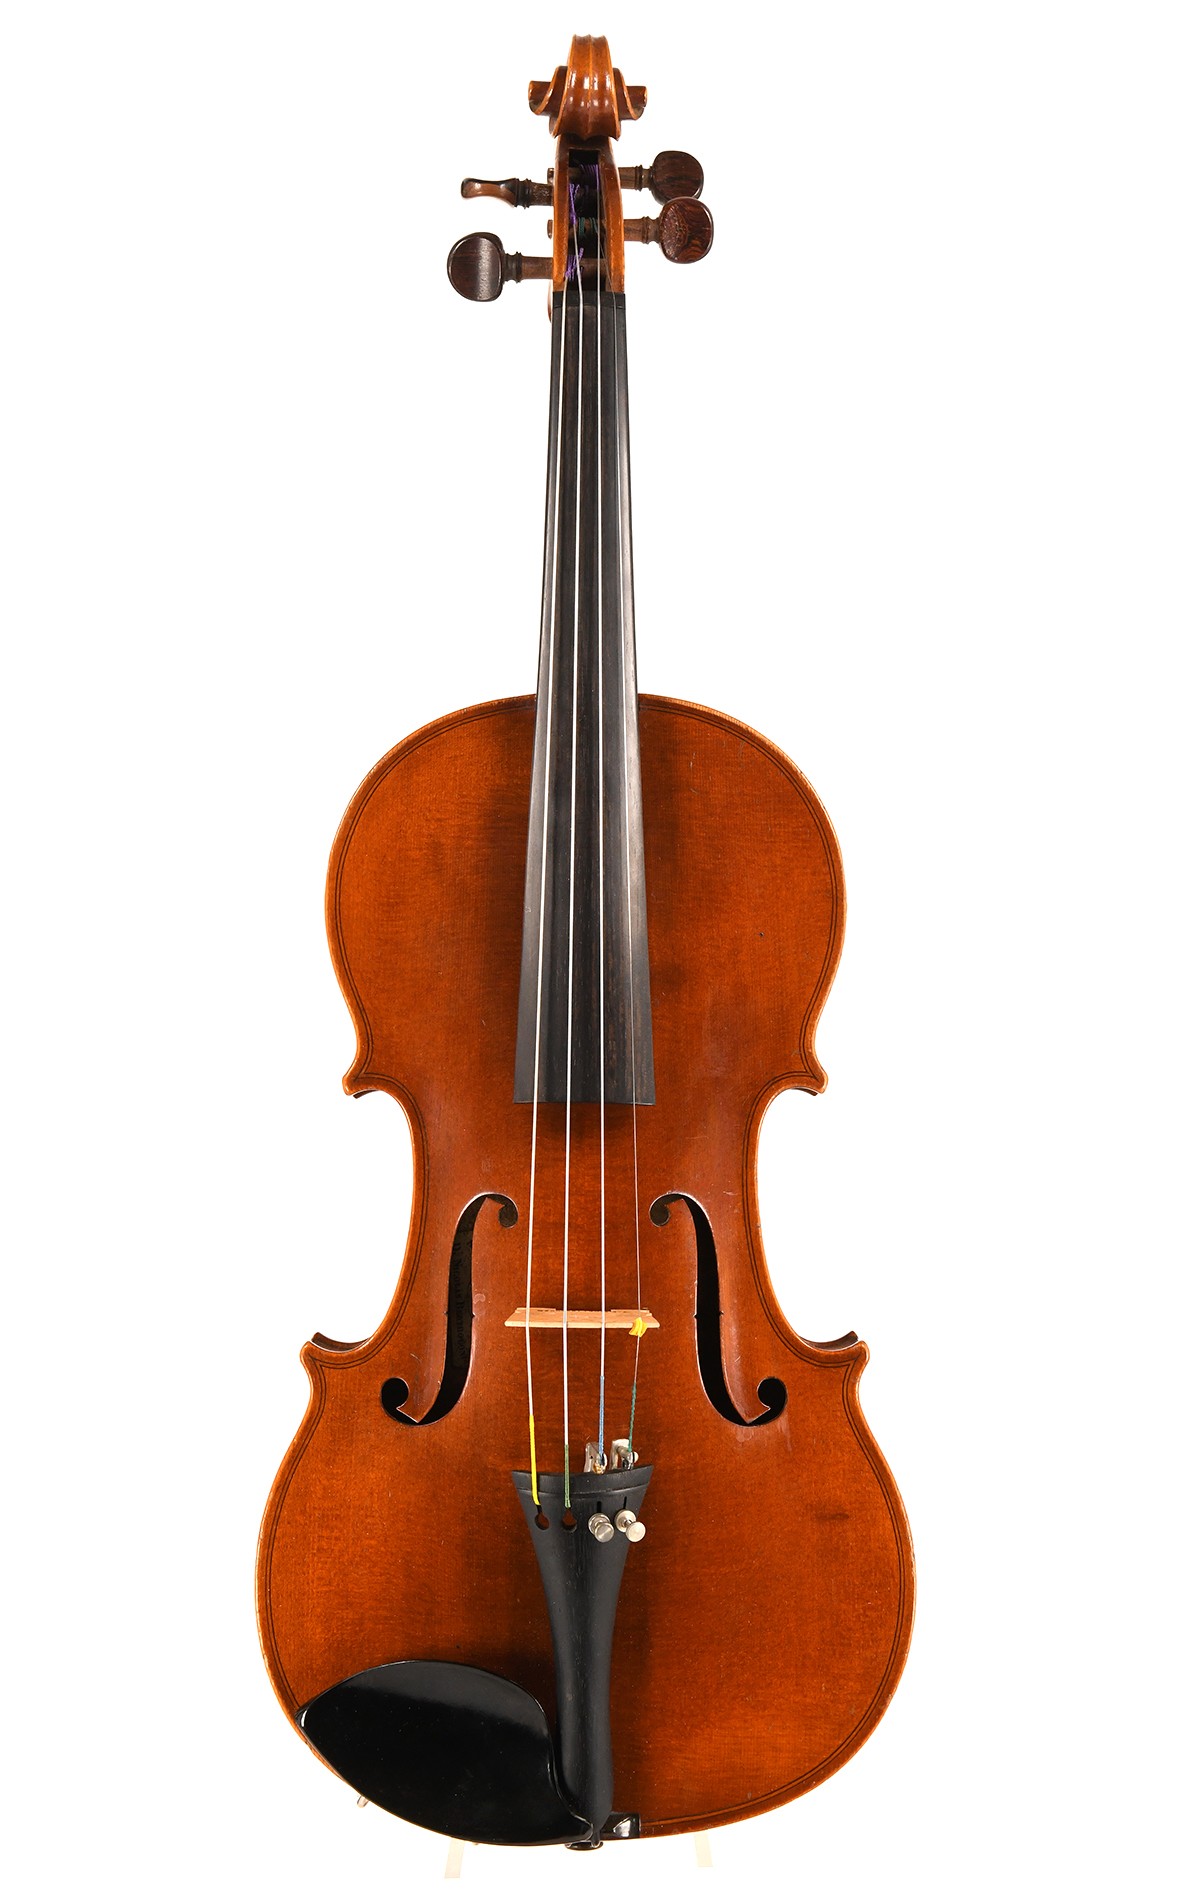 "Nicolas Bertholini" by Laberte, Mirecourt: Antique French violin SALE